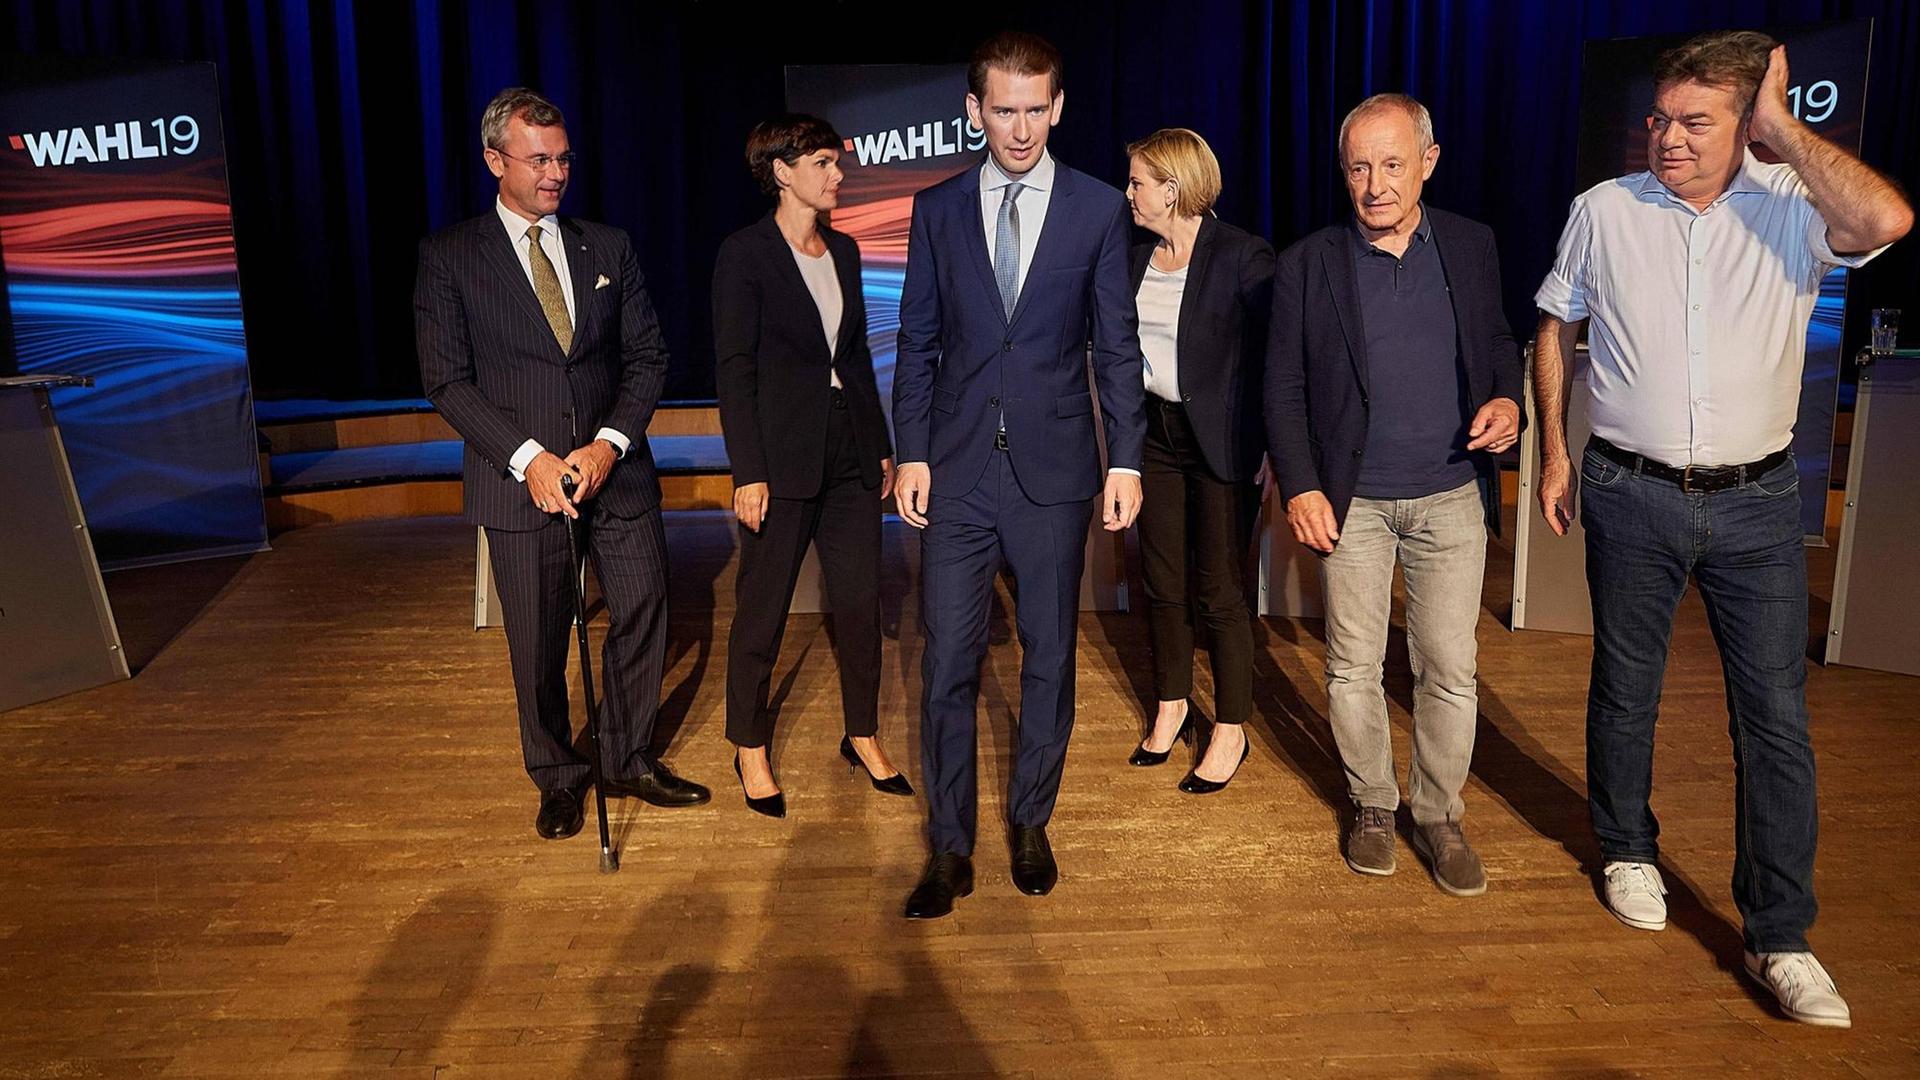 Es diskutierten Sebastian Kurz (2vL/ÖVP), Pamela Rendi-Wagner (3vL/SPÖ), Norbert Hofer (L/FPÖ), Beate Meinl-Reisinger (3vR/NEOS), Peter Pilz (2vR/JETZT) und Werner Kogler (R/Die Grünen). Nationalratswahl 2019 1. Elefantenrunde